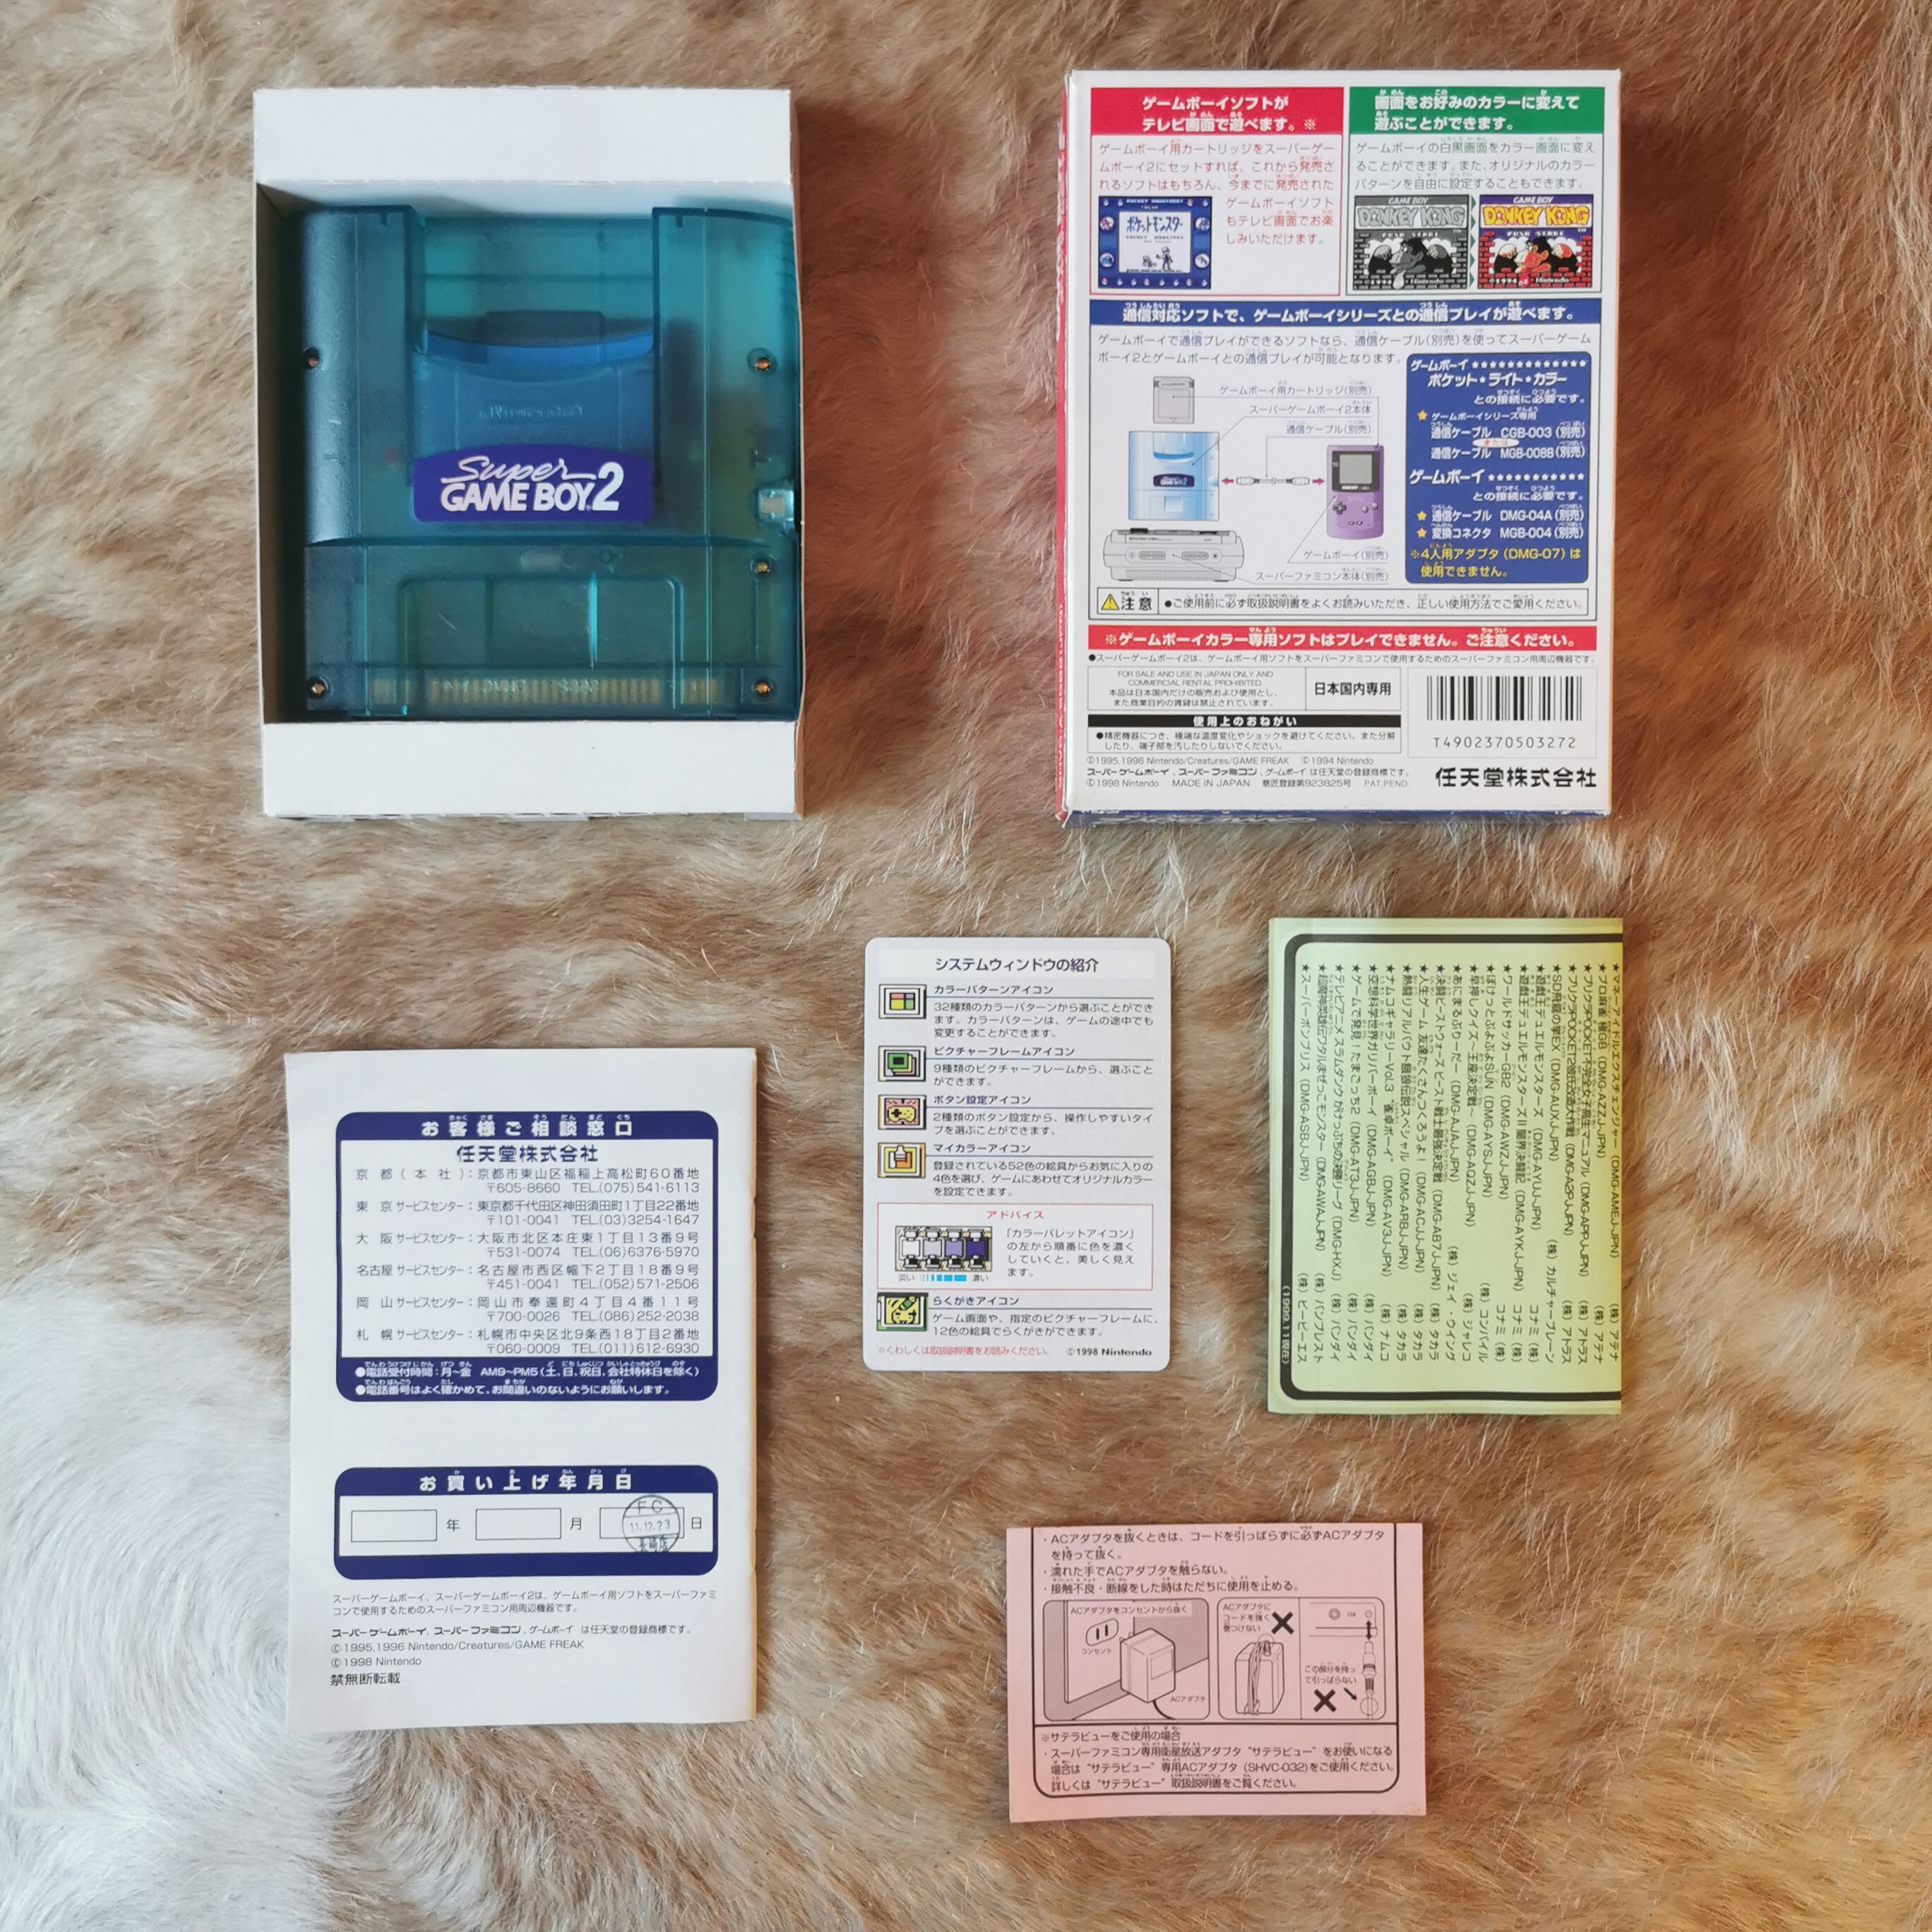  SNES Super Game Boy 2